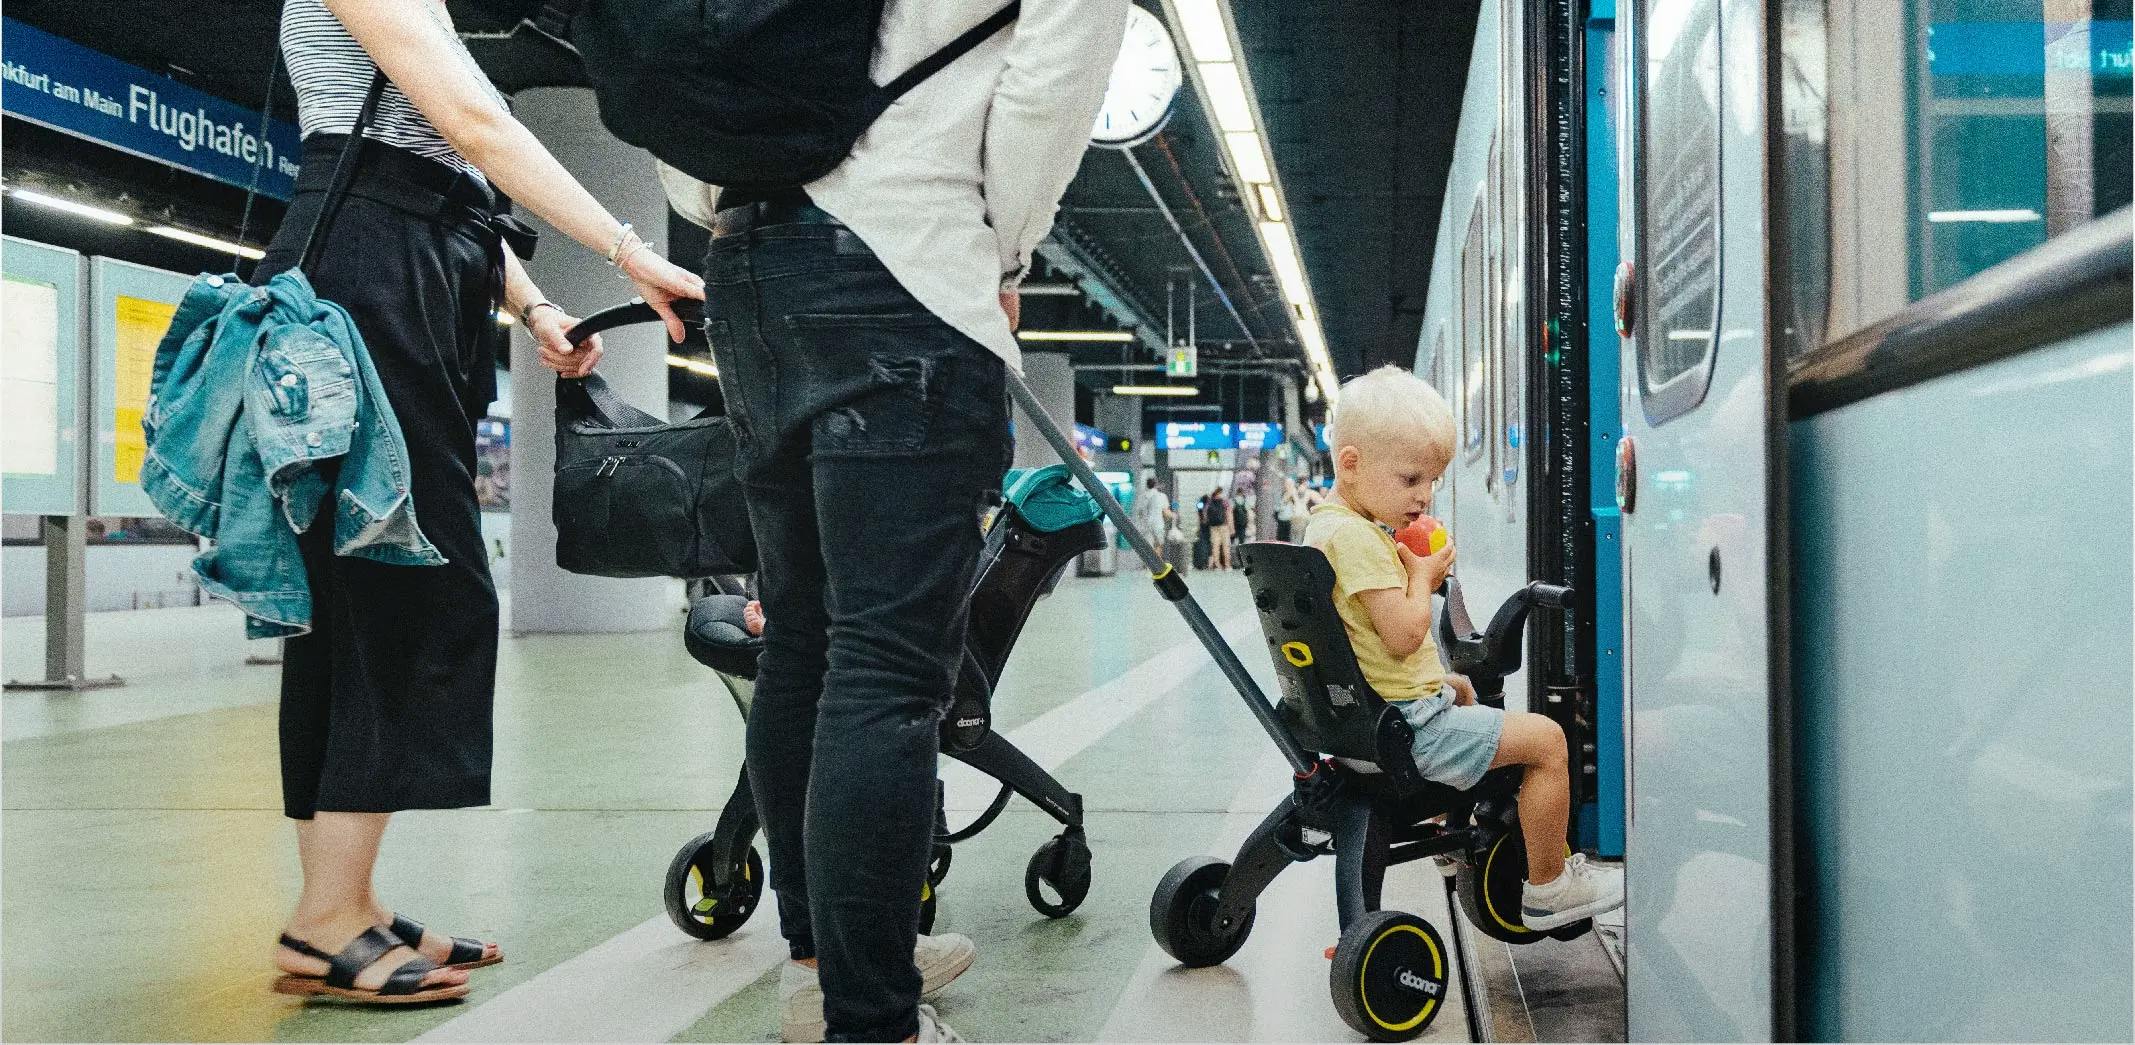 How the Liki Trike makes public transportation easy